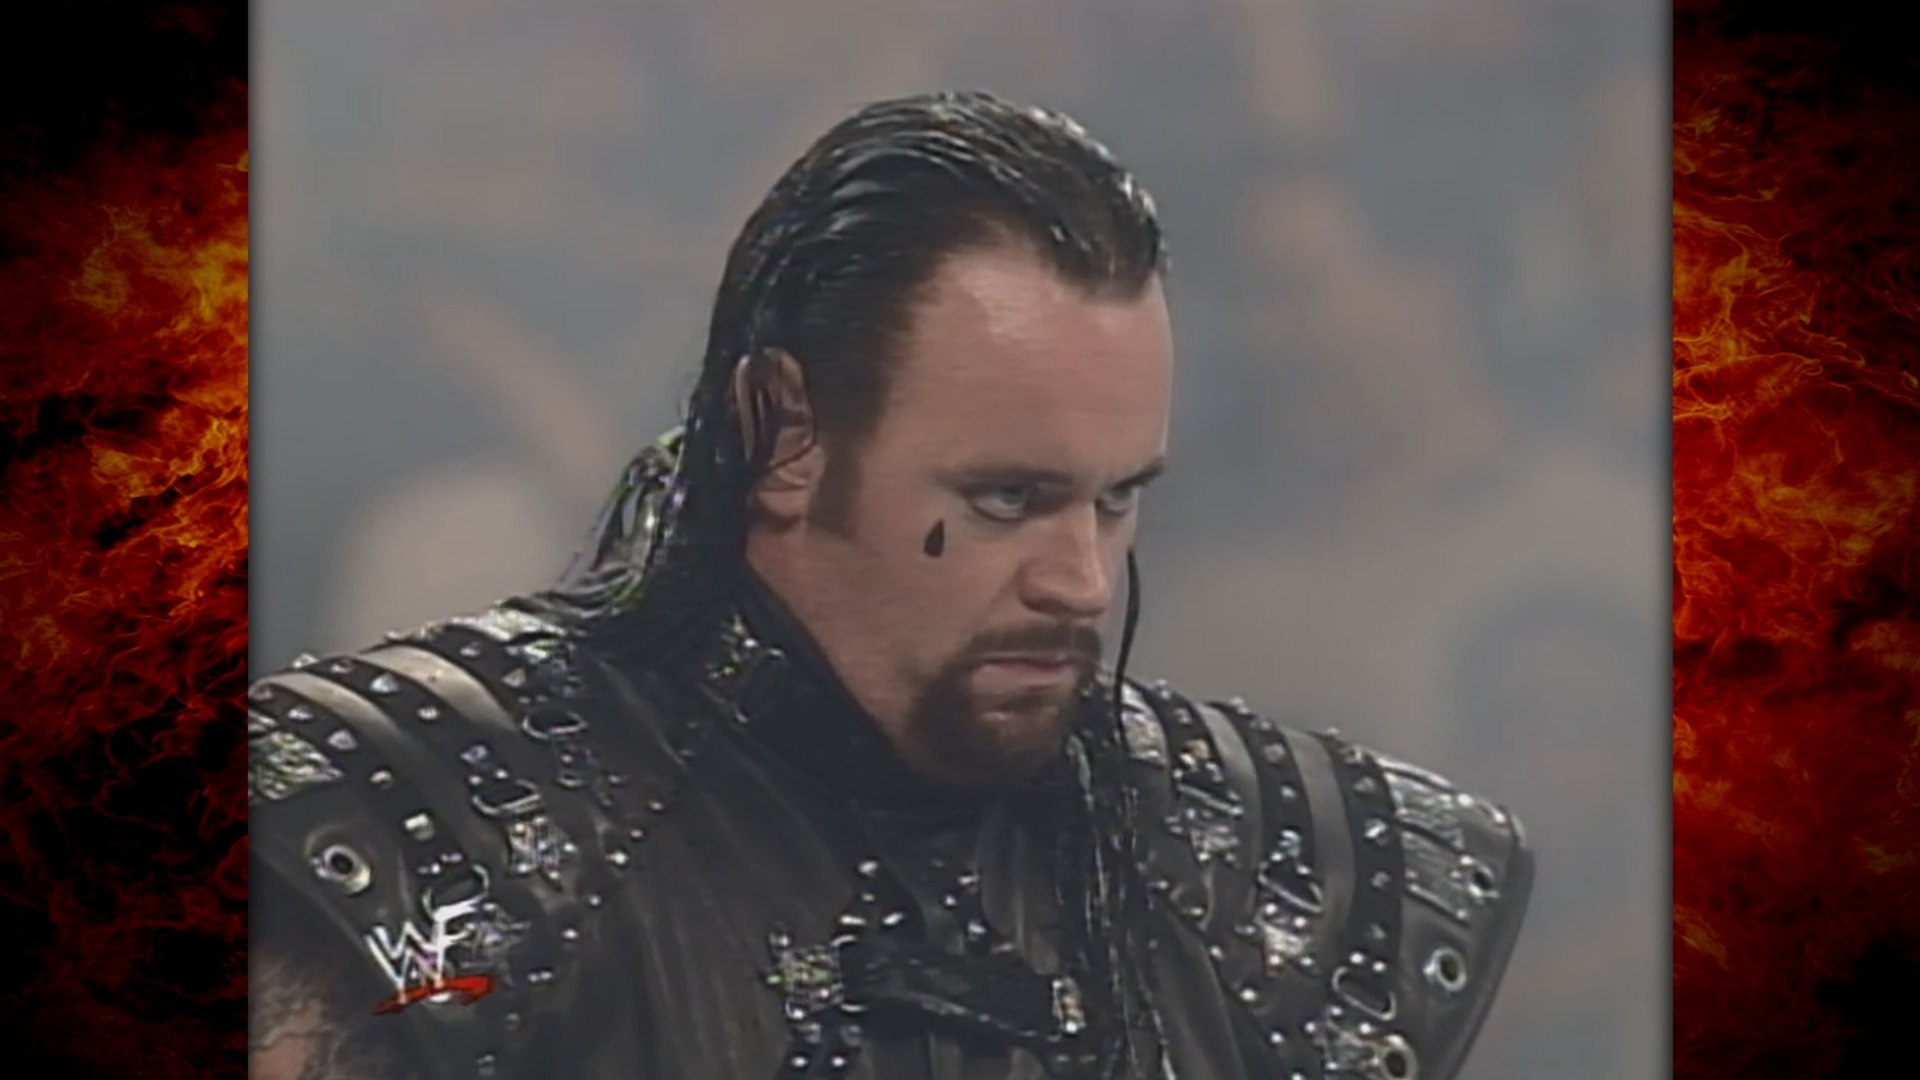 undertaker wwf 1998